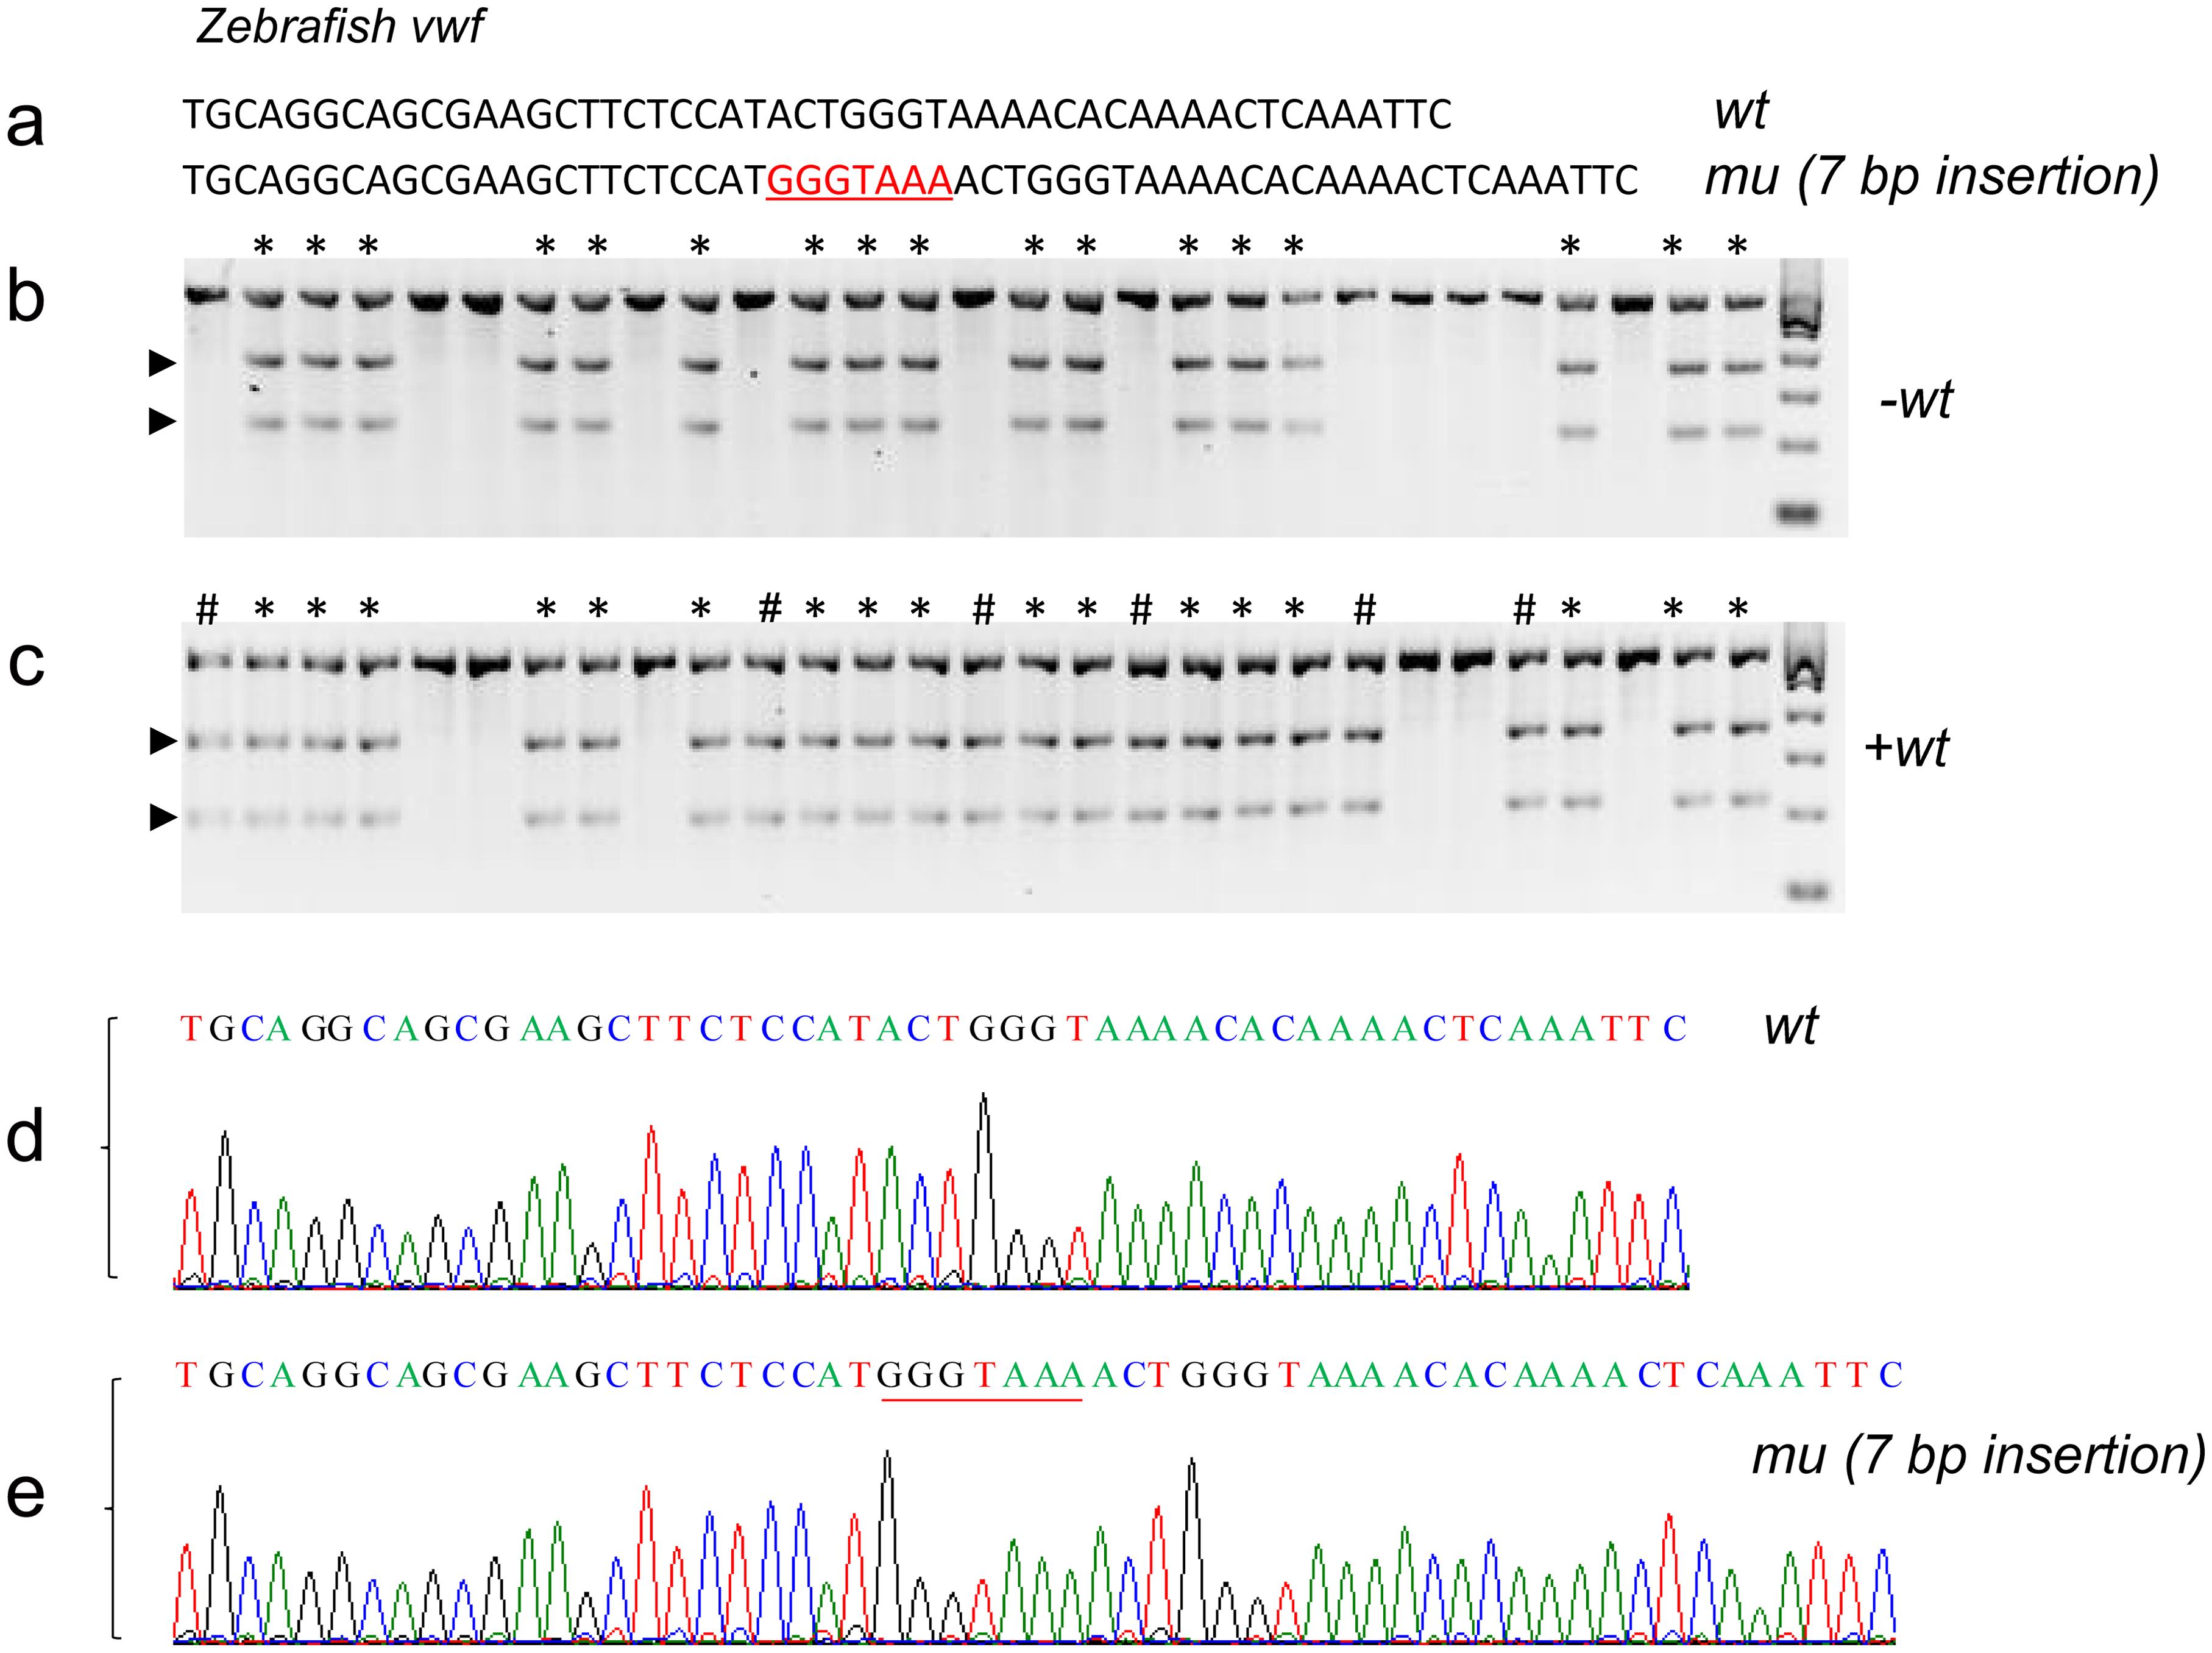 Genotyping wild-type, heterozygous and homozygous zebrafish with 7 bp-insertion in <italic>vwf</italic>.